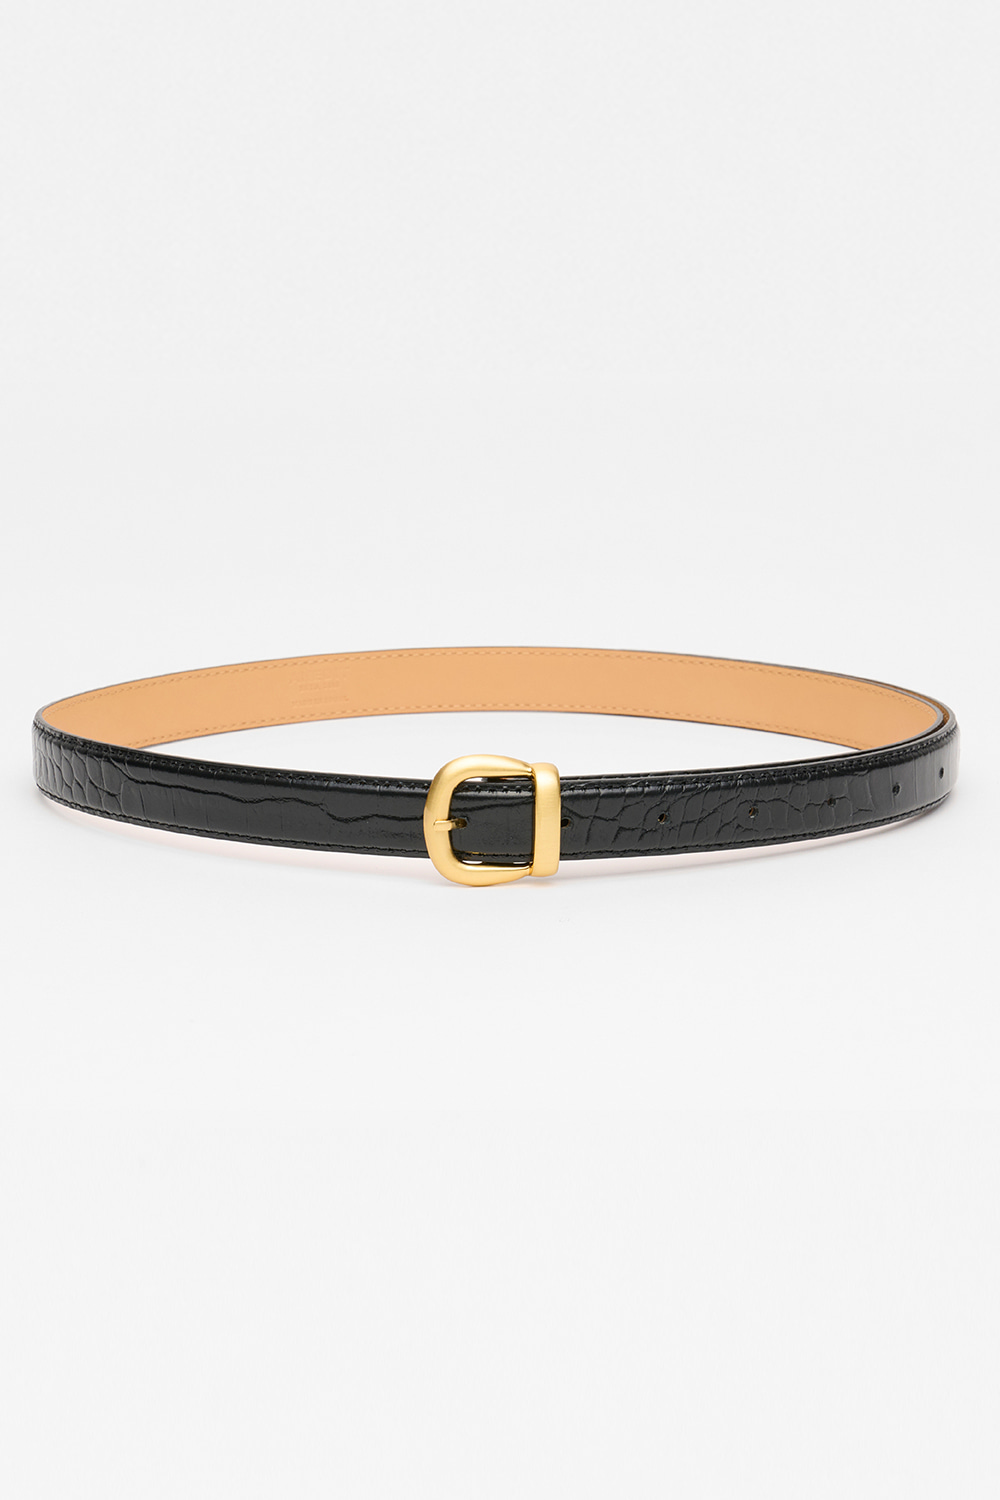 Croc Classic Leather Belt_Black Gold